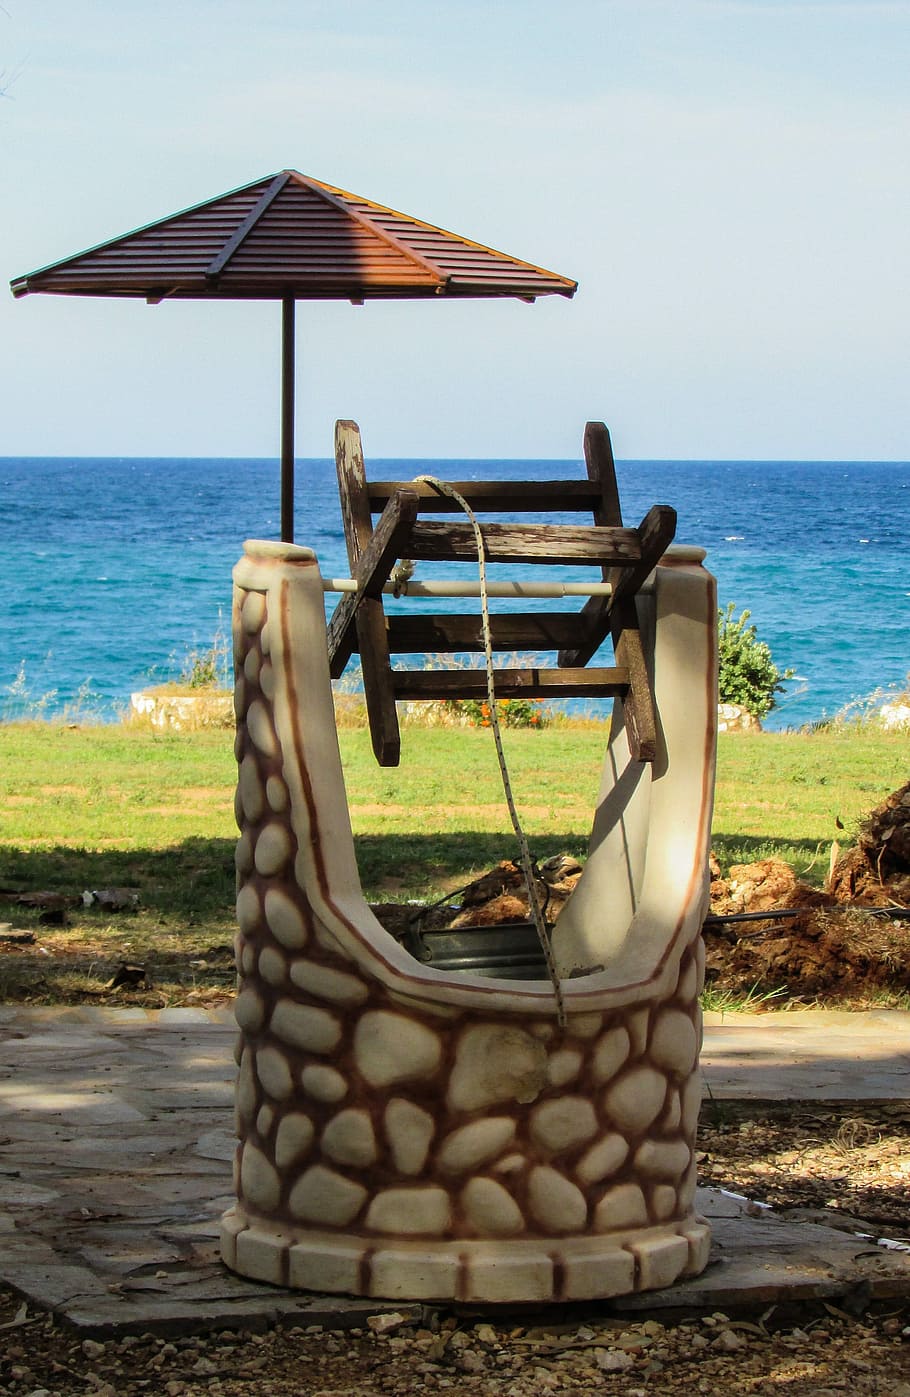 Cyprus, Hotel, Garden, Decoration, Well, sea, horizon over water, water, beach, outdoors